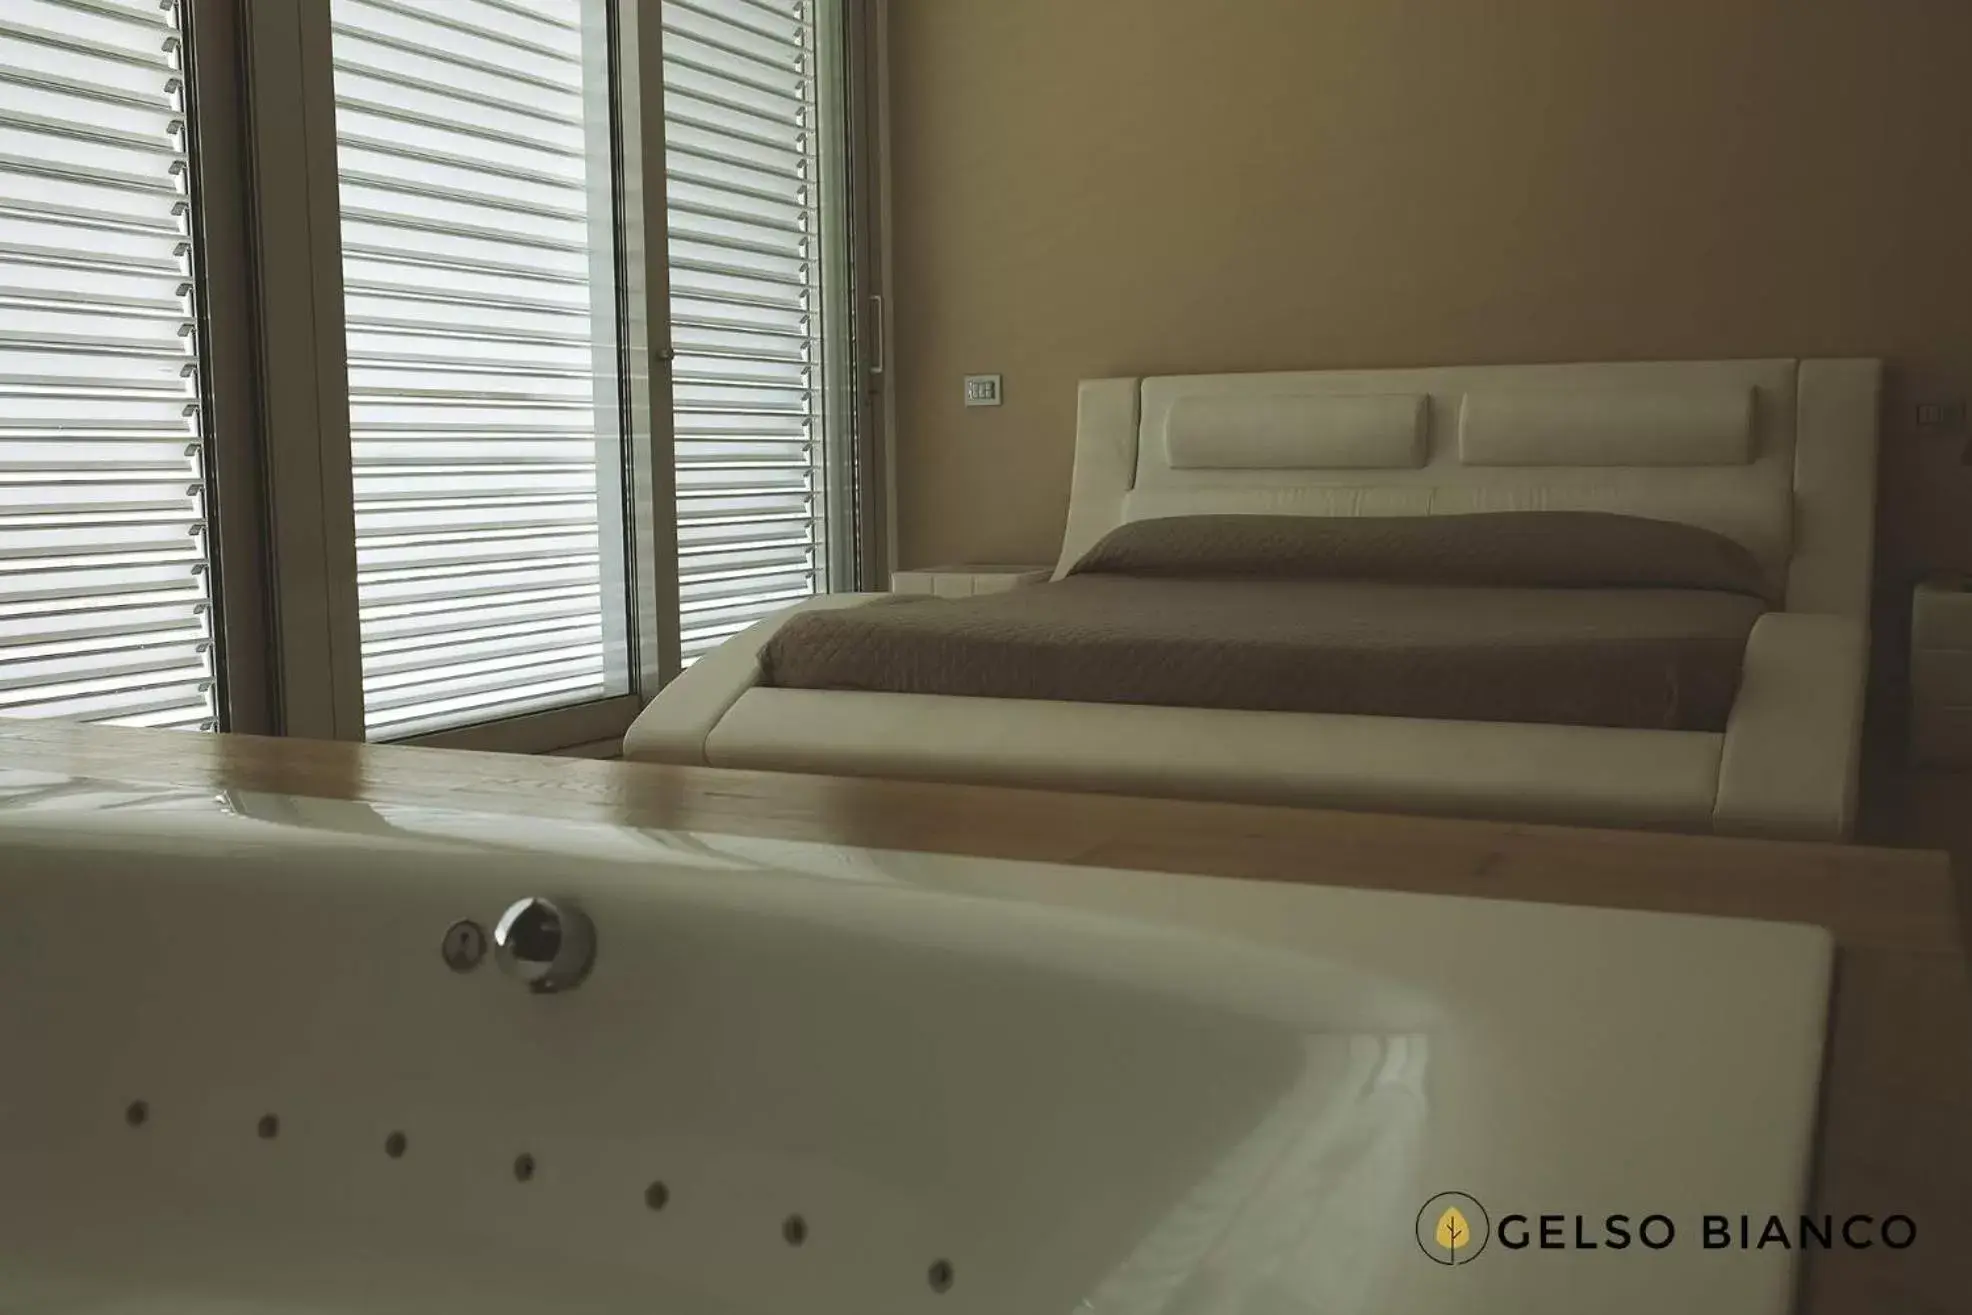 Bedroom, Bathroom in Gelso Bianco Country Resort